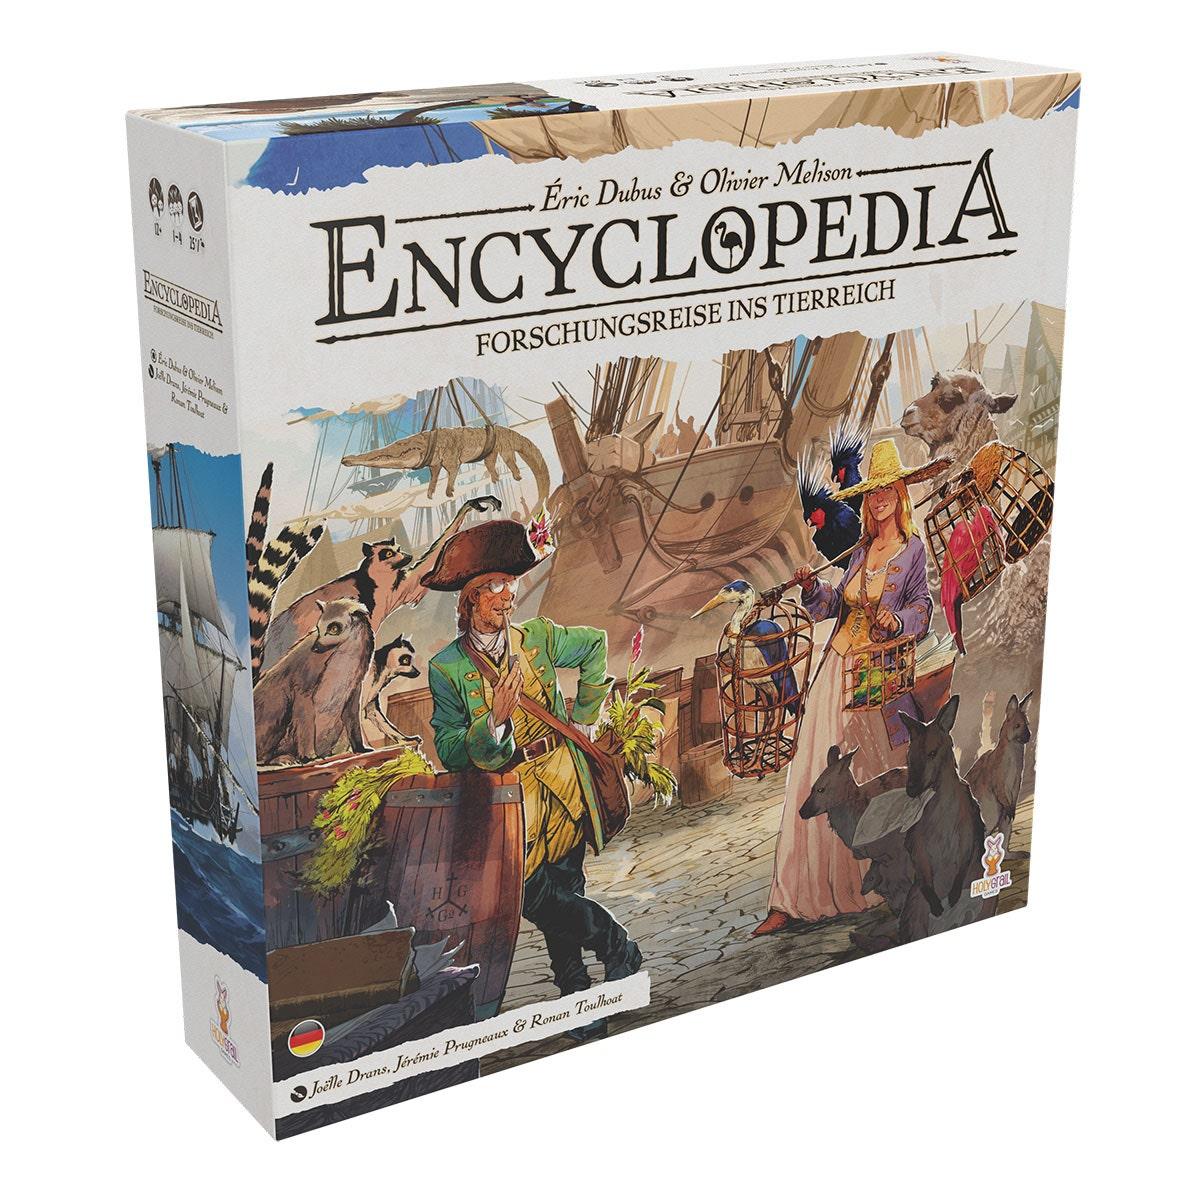 Encyclopedia